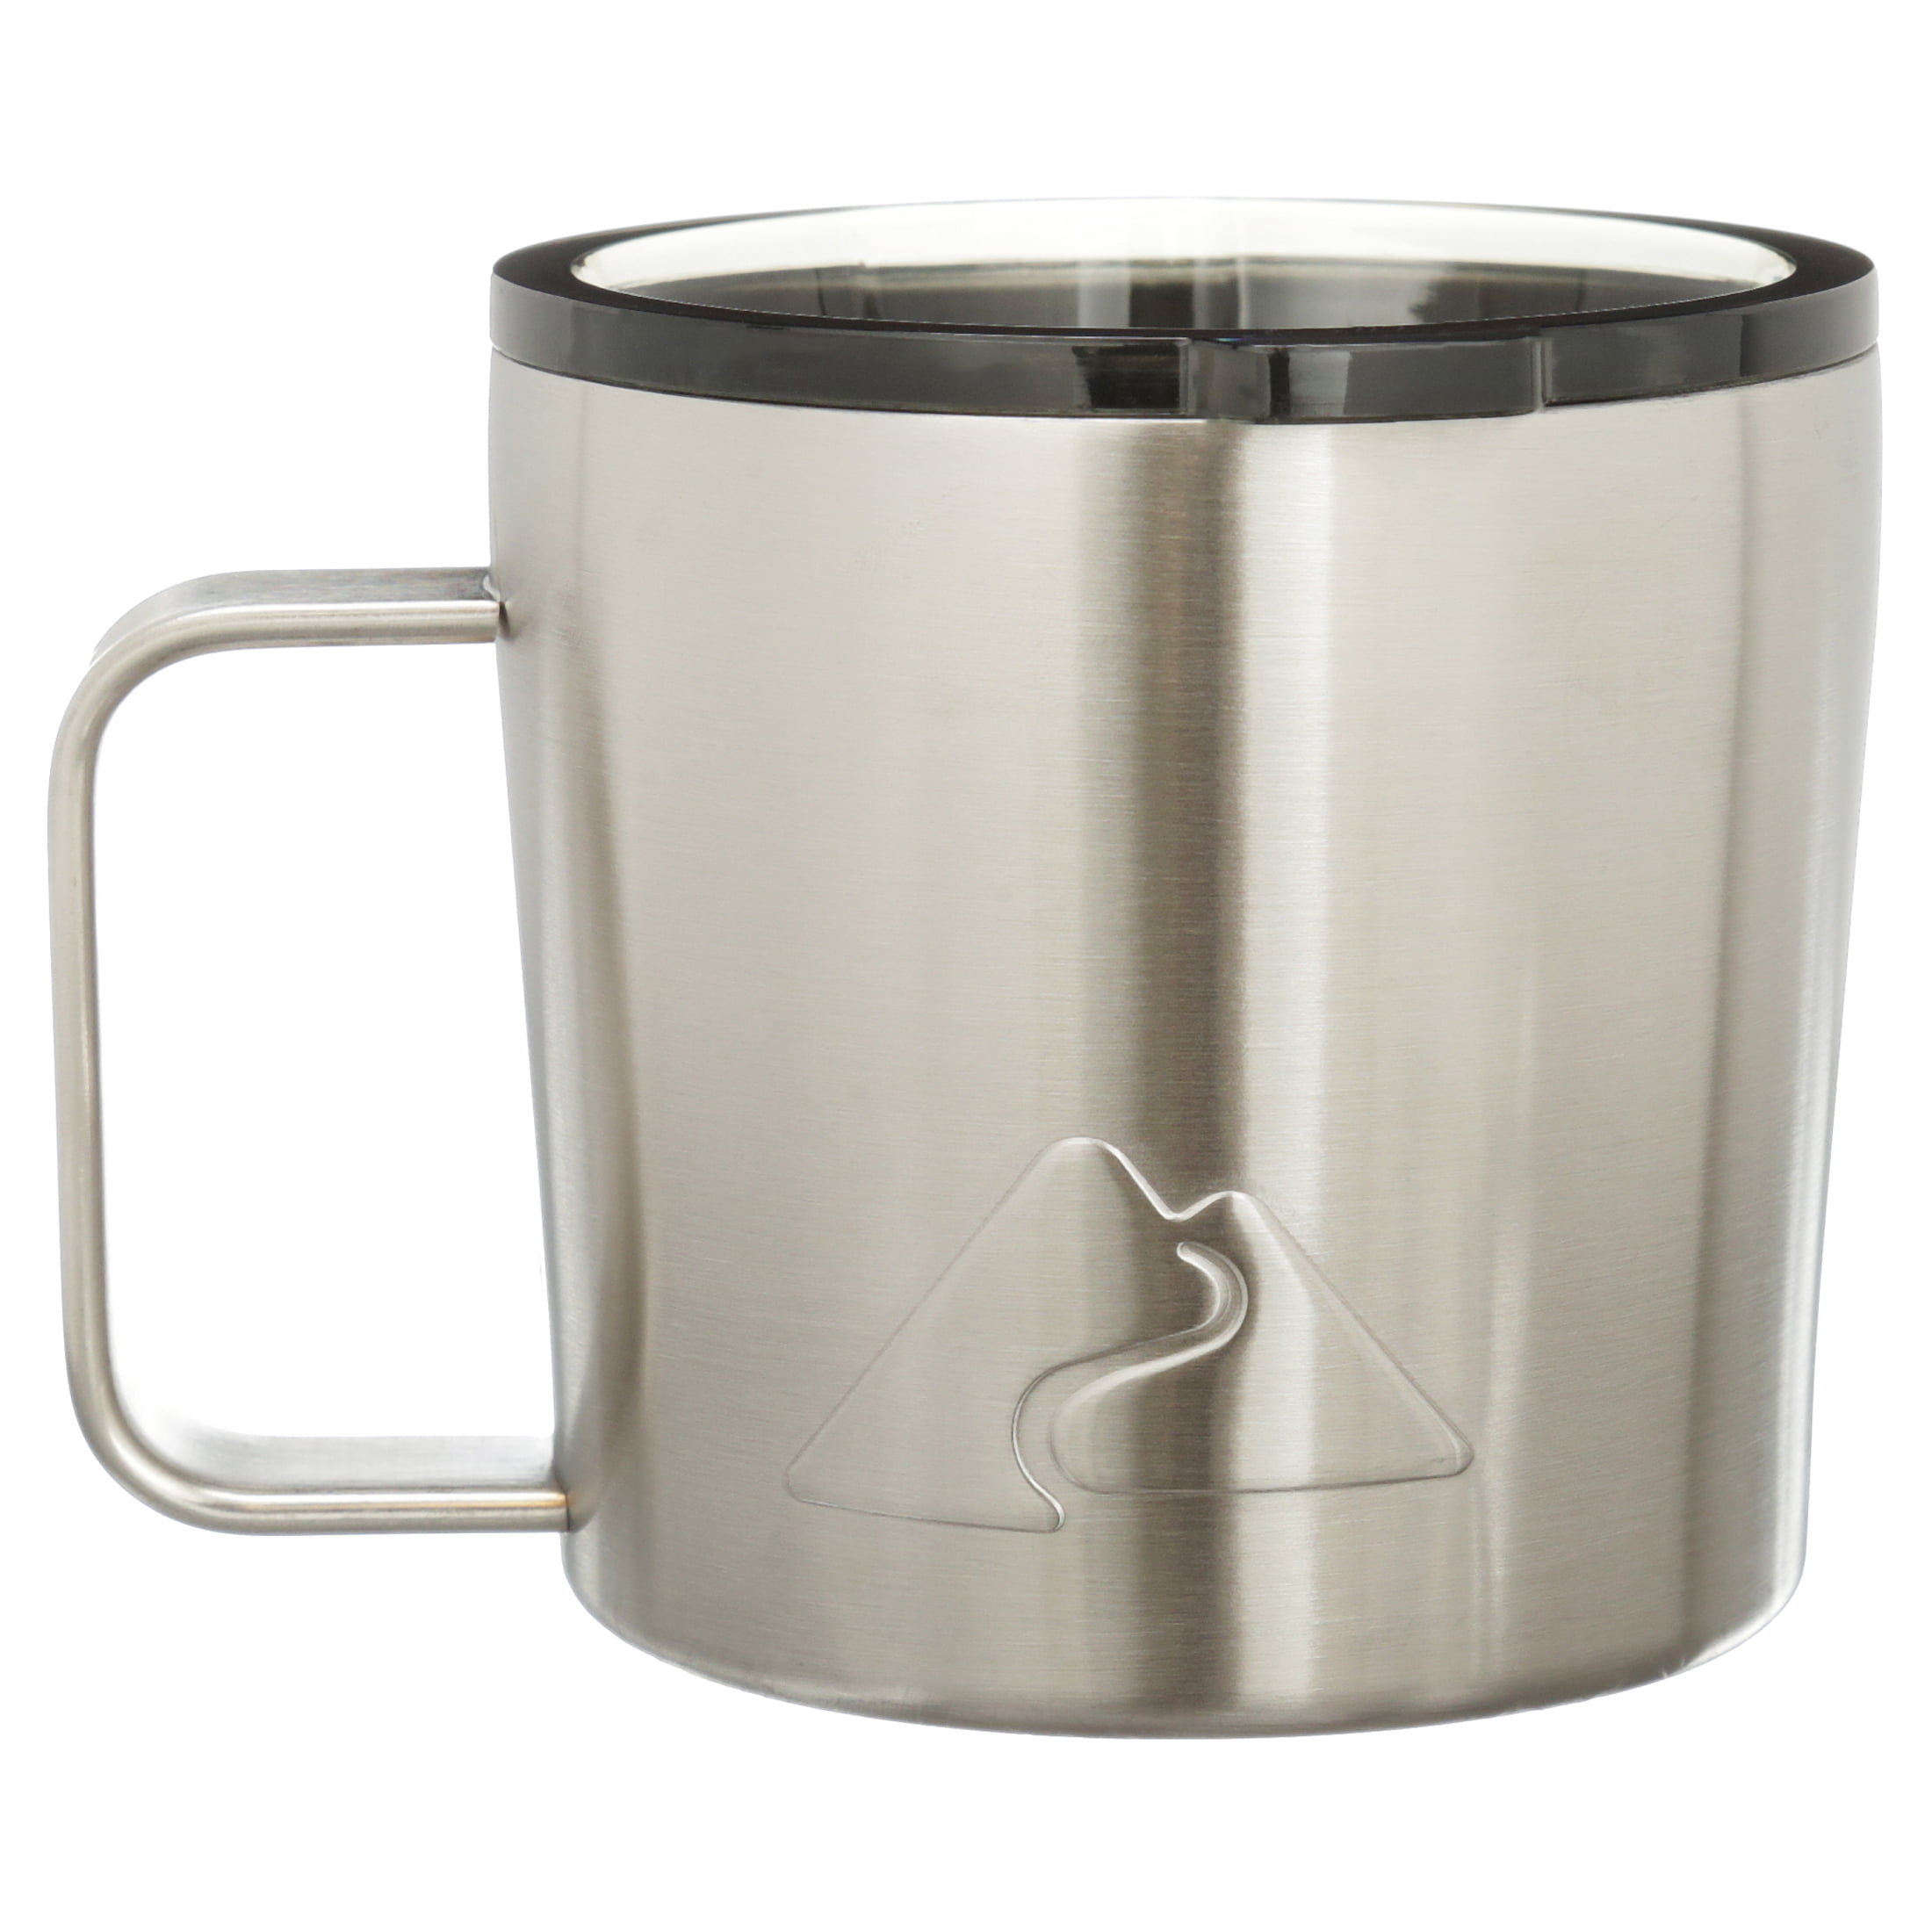  Maxam Stainless Steel Travel Mug, 14-Ounce : Home & Kitchen